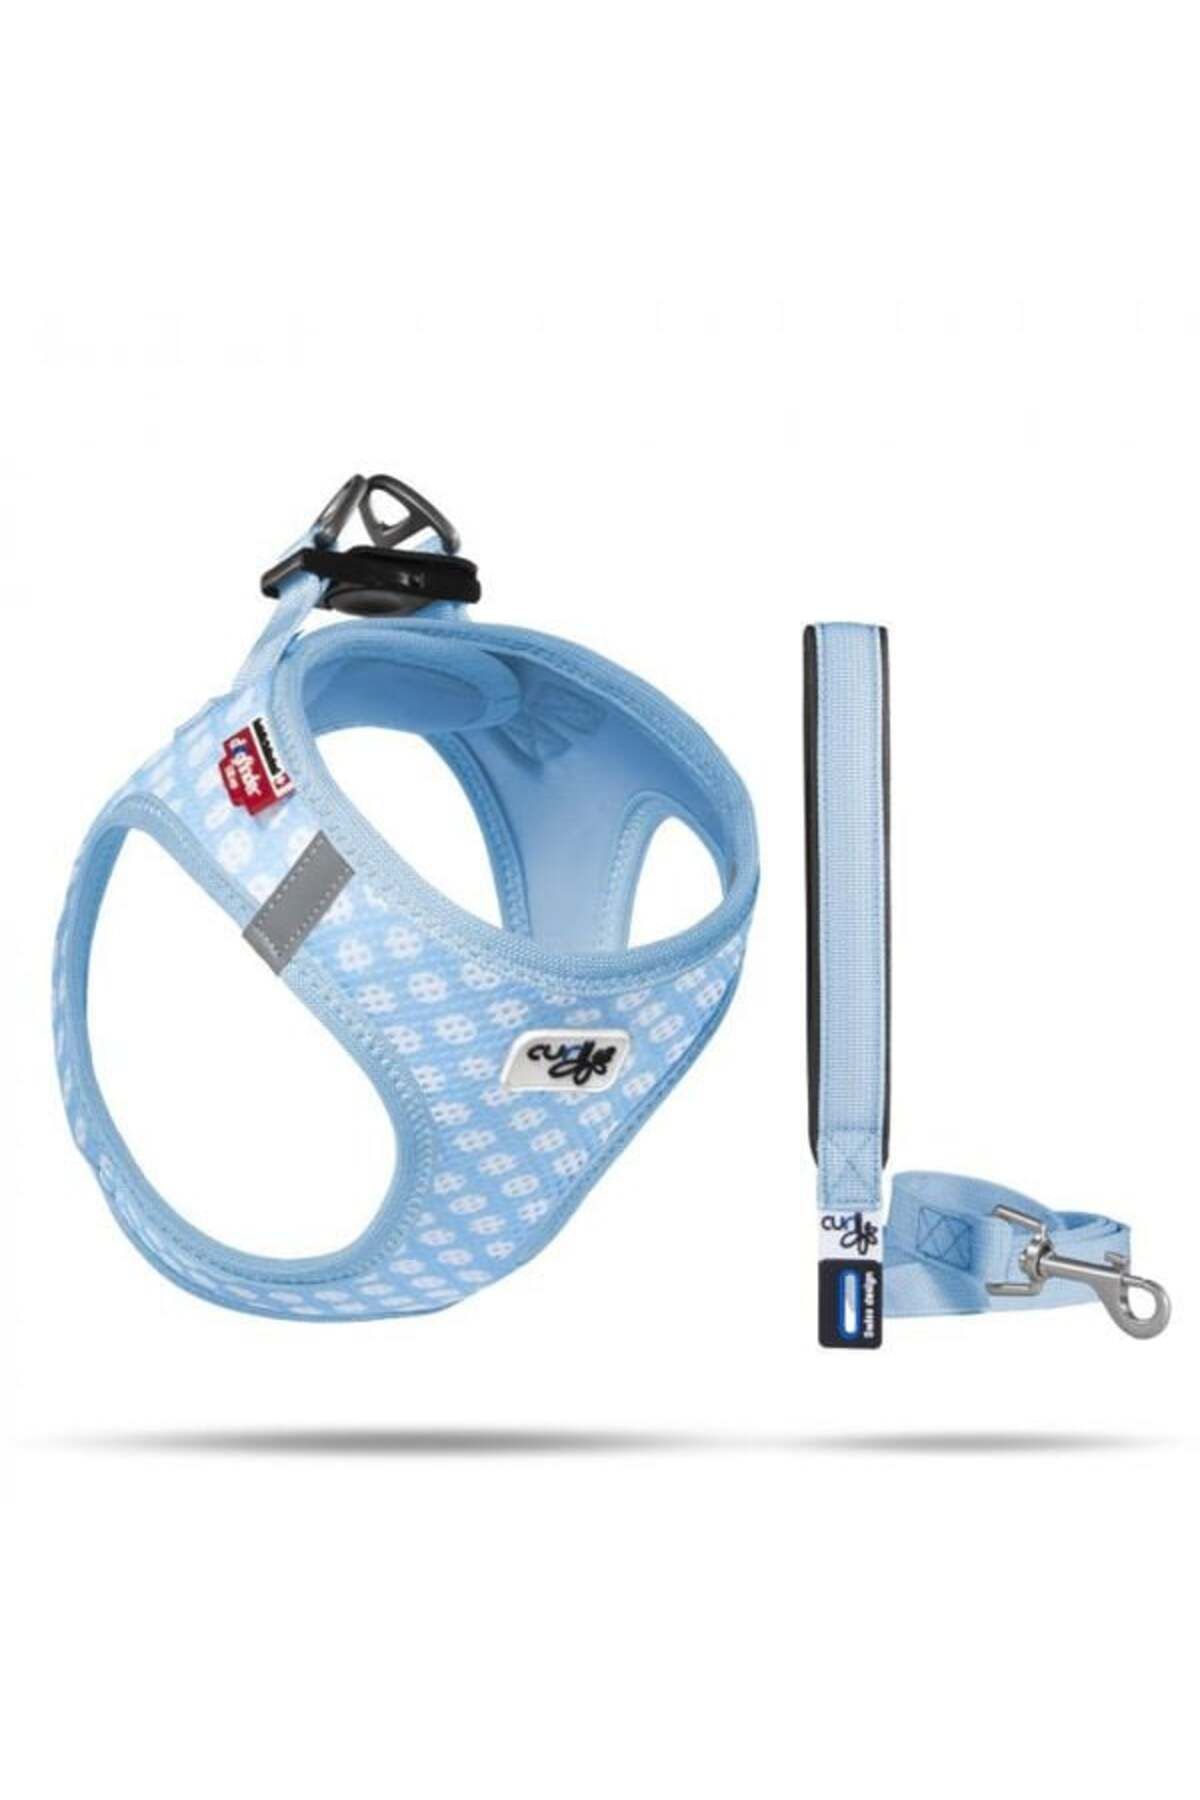 Curli Vest Air-Mesh Köpek Göğüs Tasması Mavi Puantiye Xxxsmall 26-30 Cm